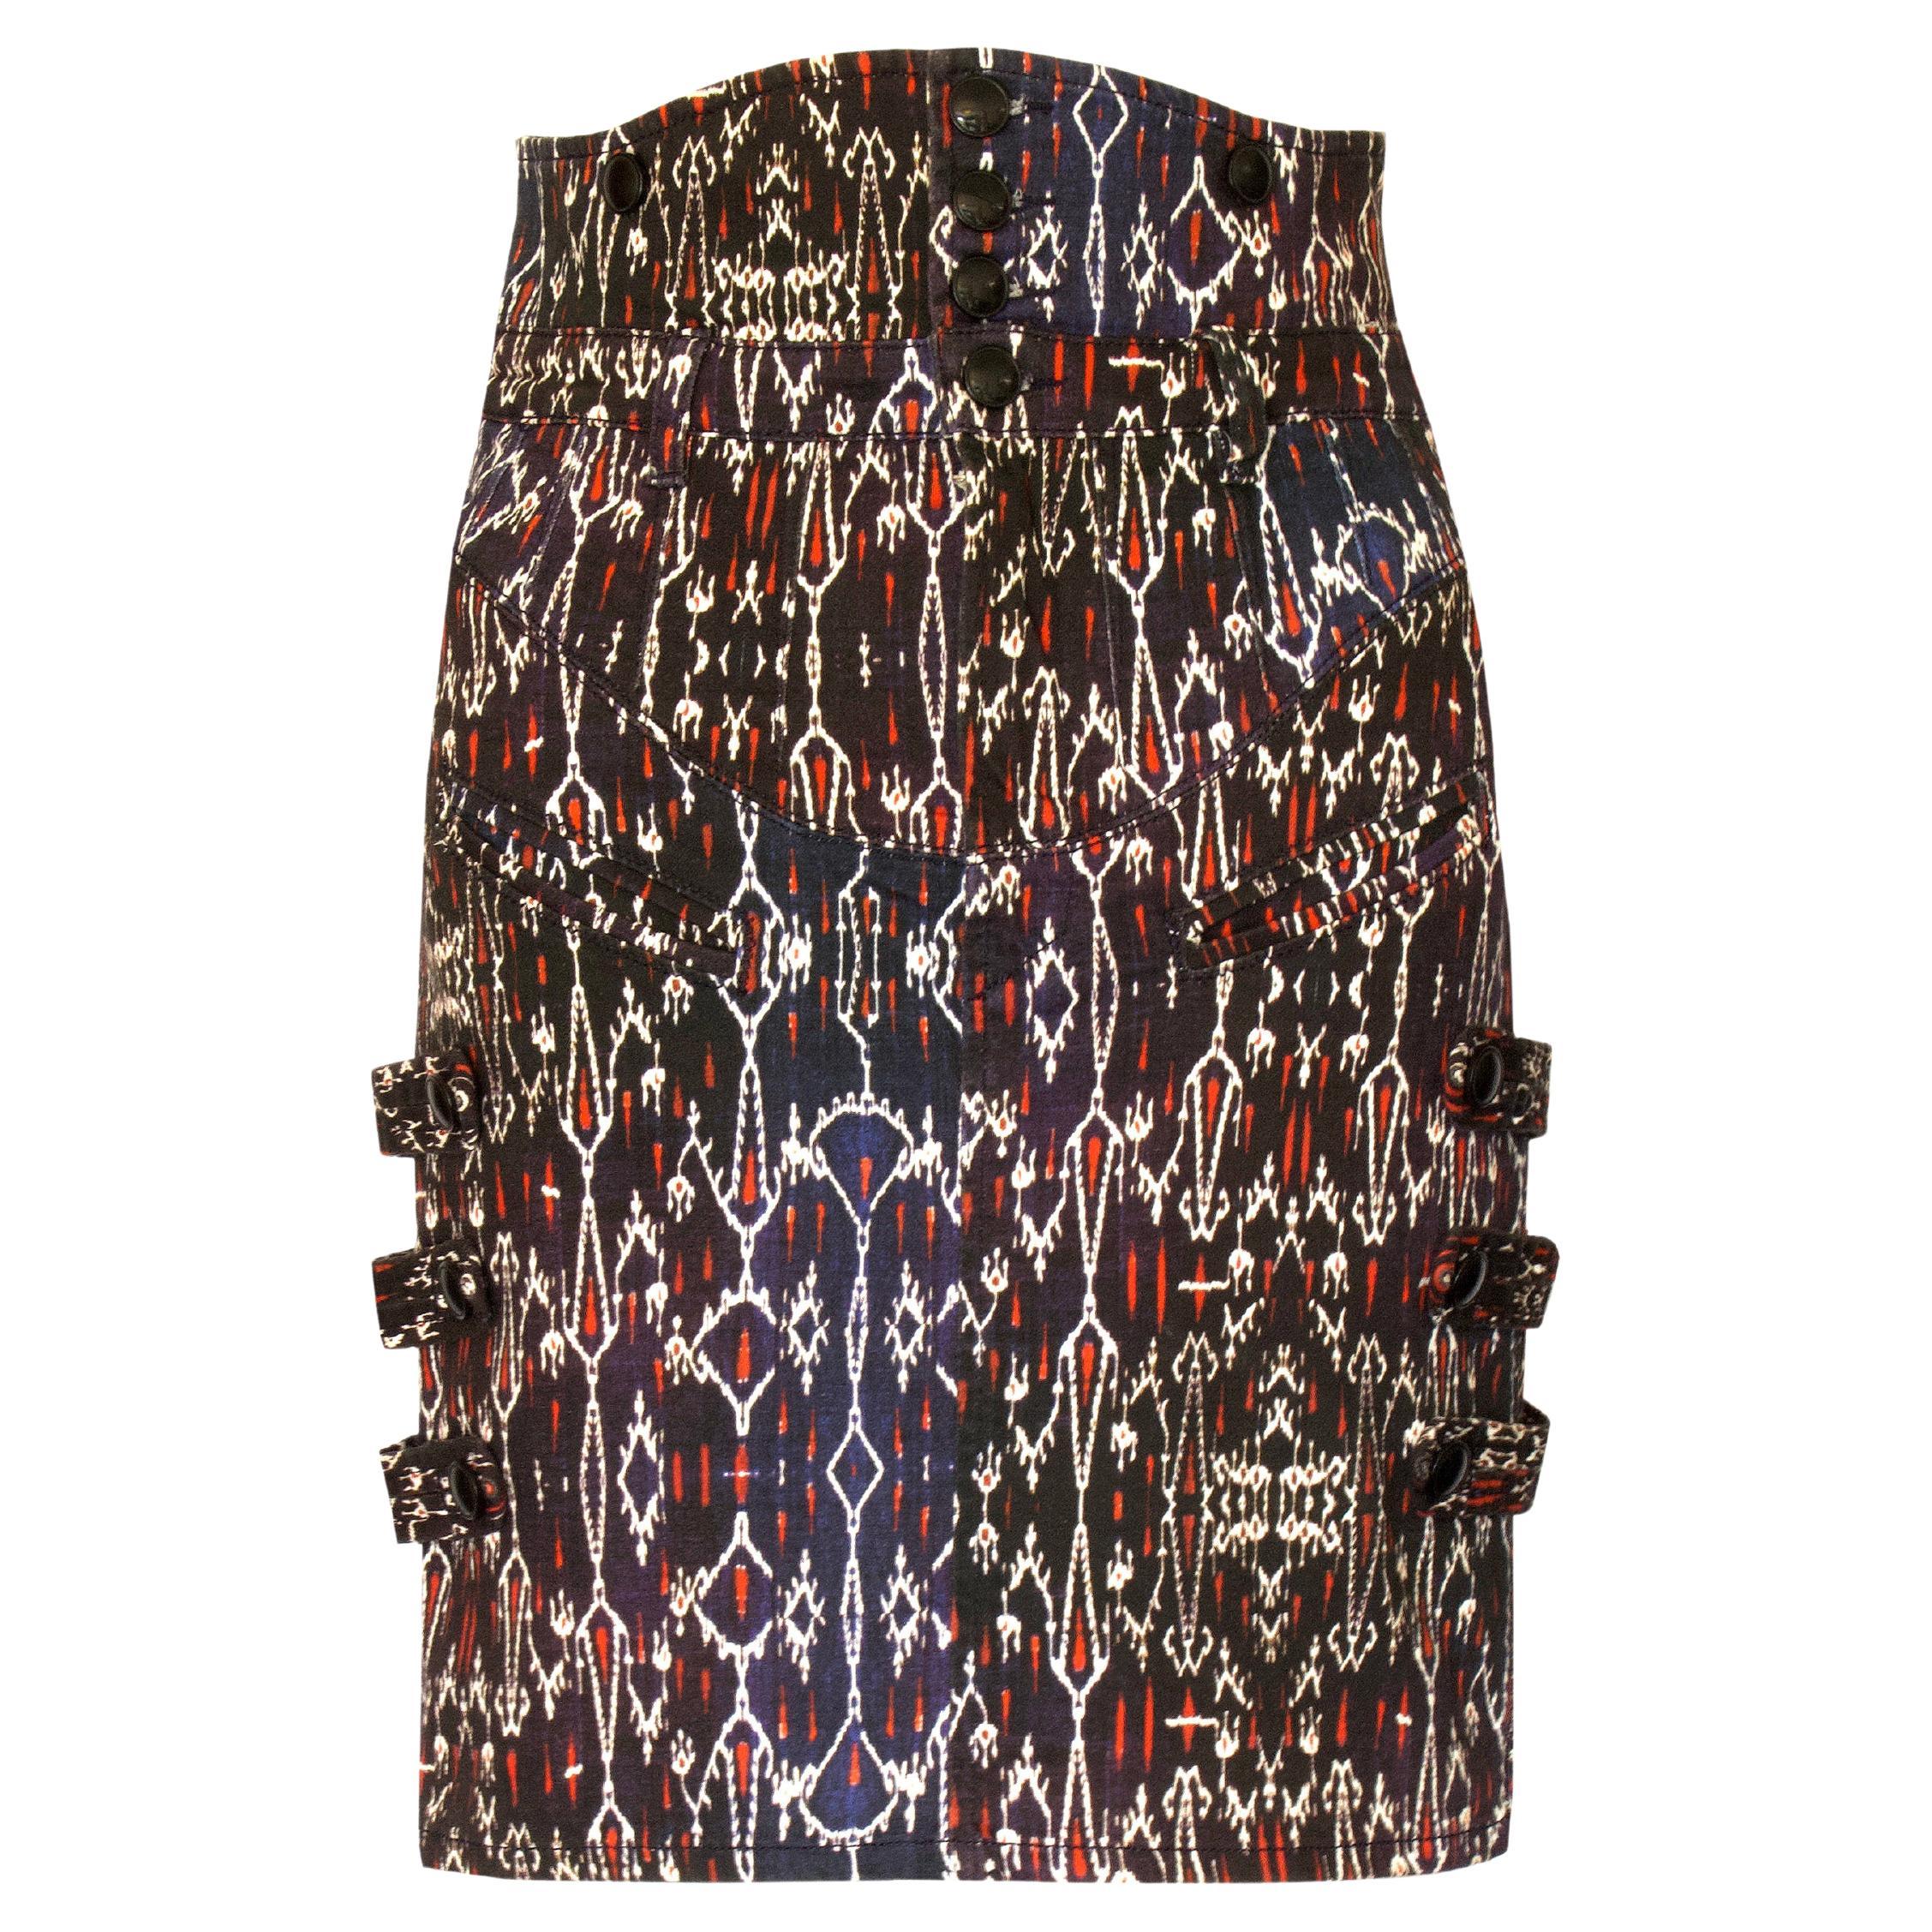 Isabel Marant Skirt - High-Waisted - Stretch Cotton - Side Strap Detailing  For Sale